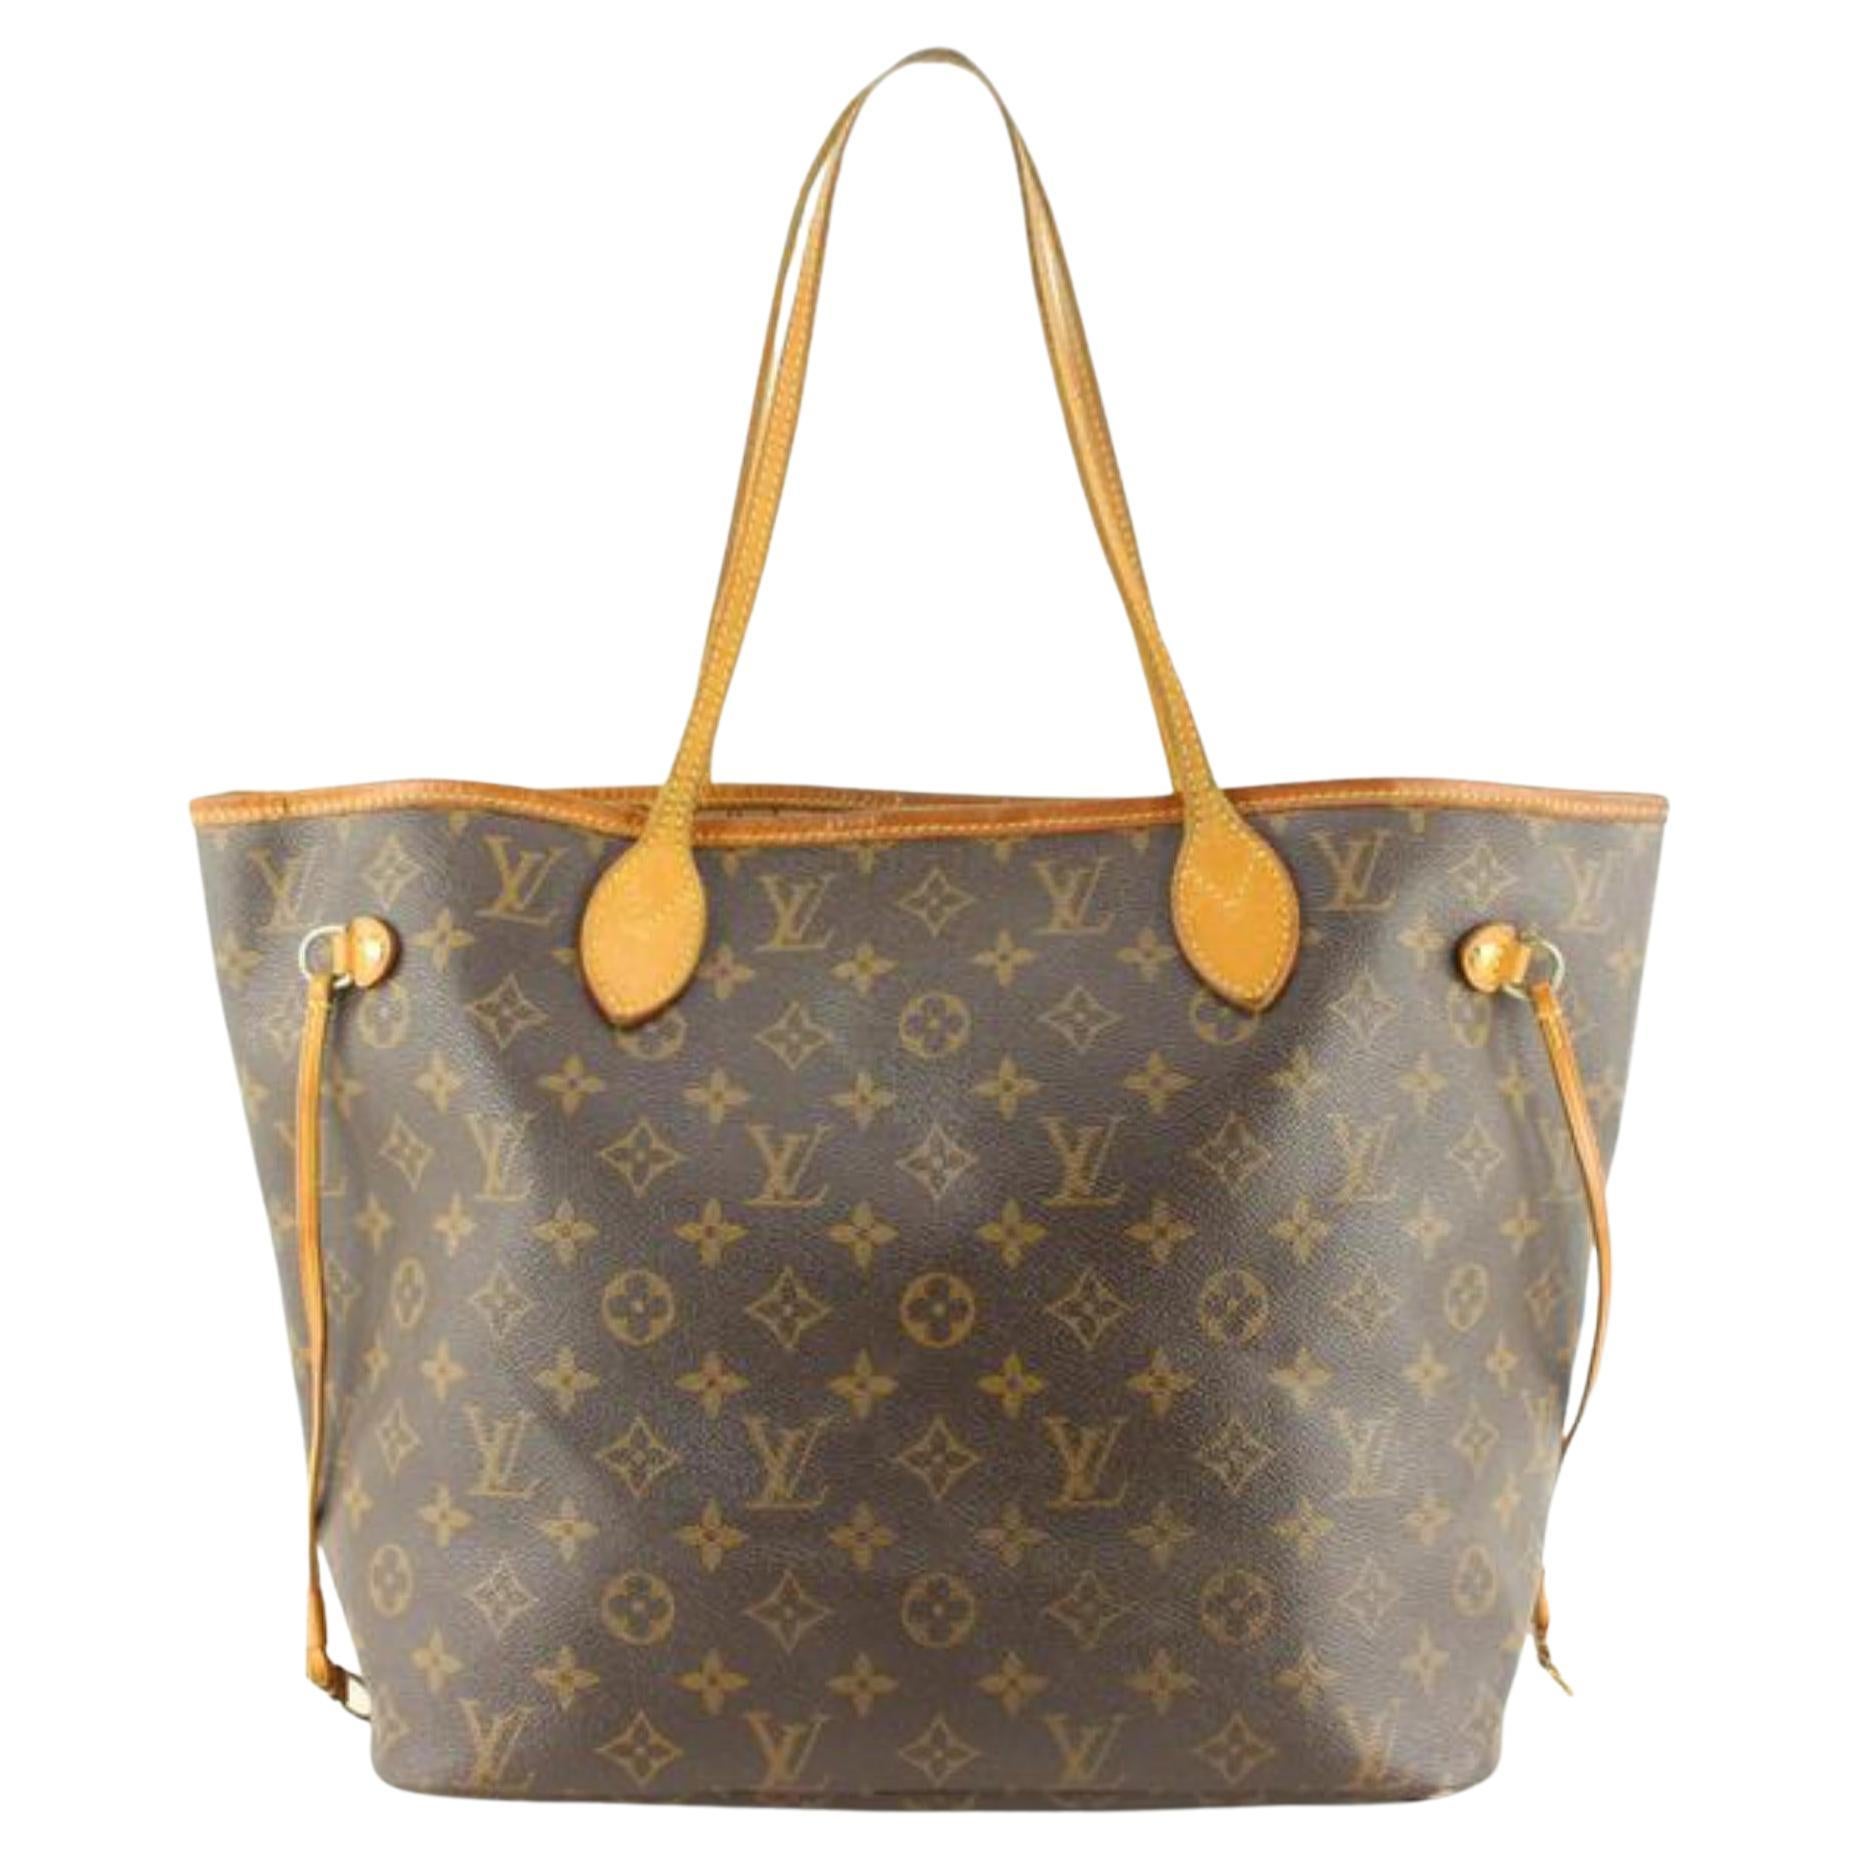 Louis Vuitton Neverfull MM Tote Bag mit Monogramm 4lz719s im Angebot